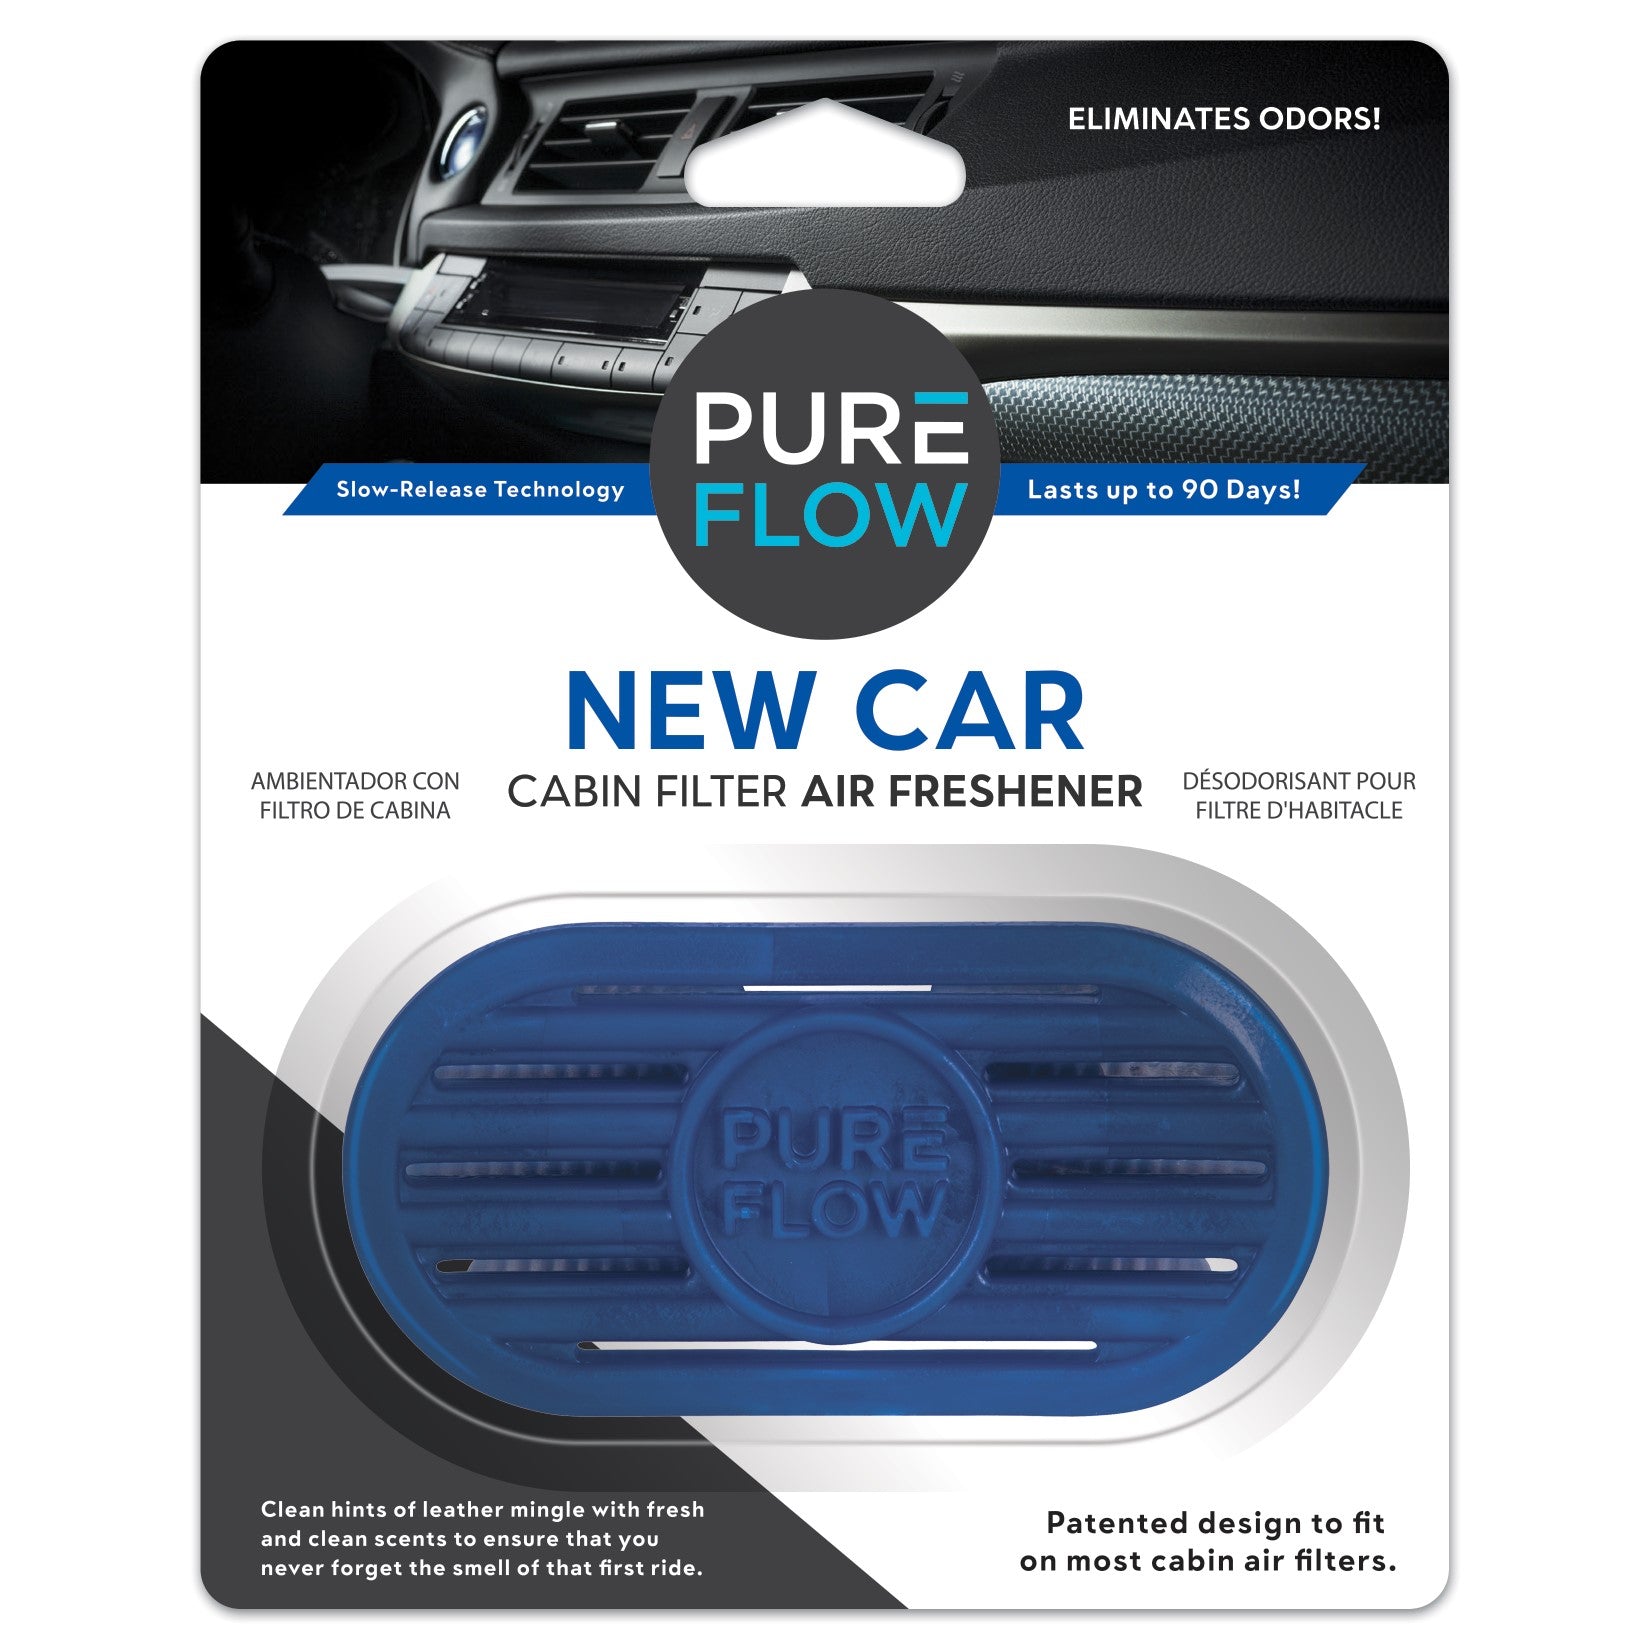 New Car, PUREFLOW® Cabin Filter Air Freshener with Odor Eliminator